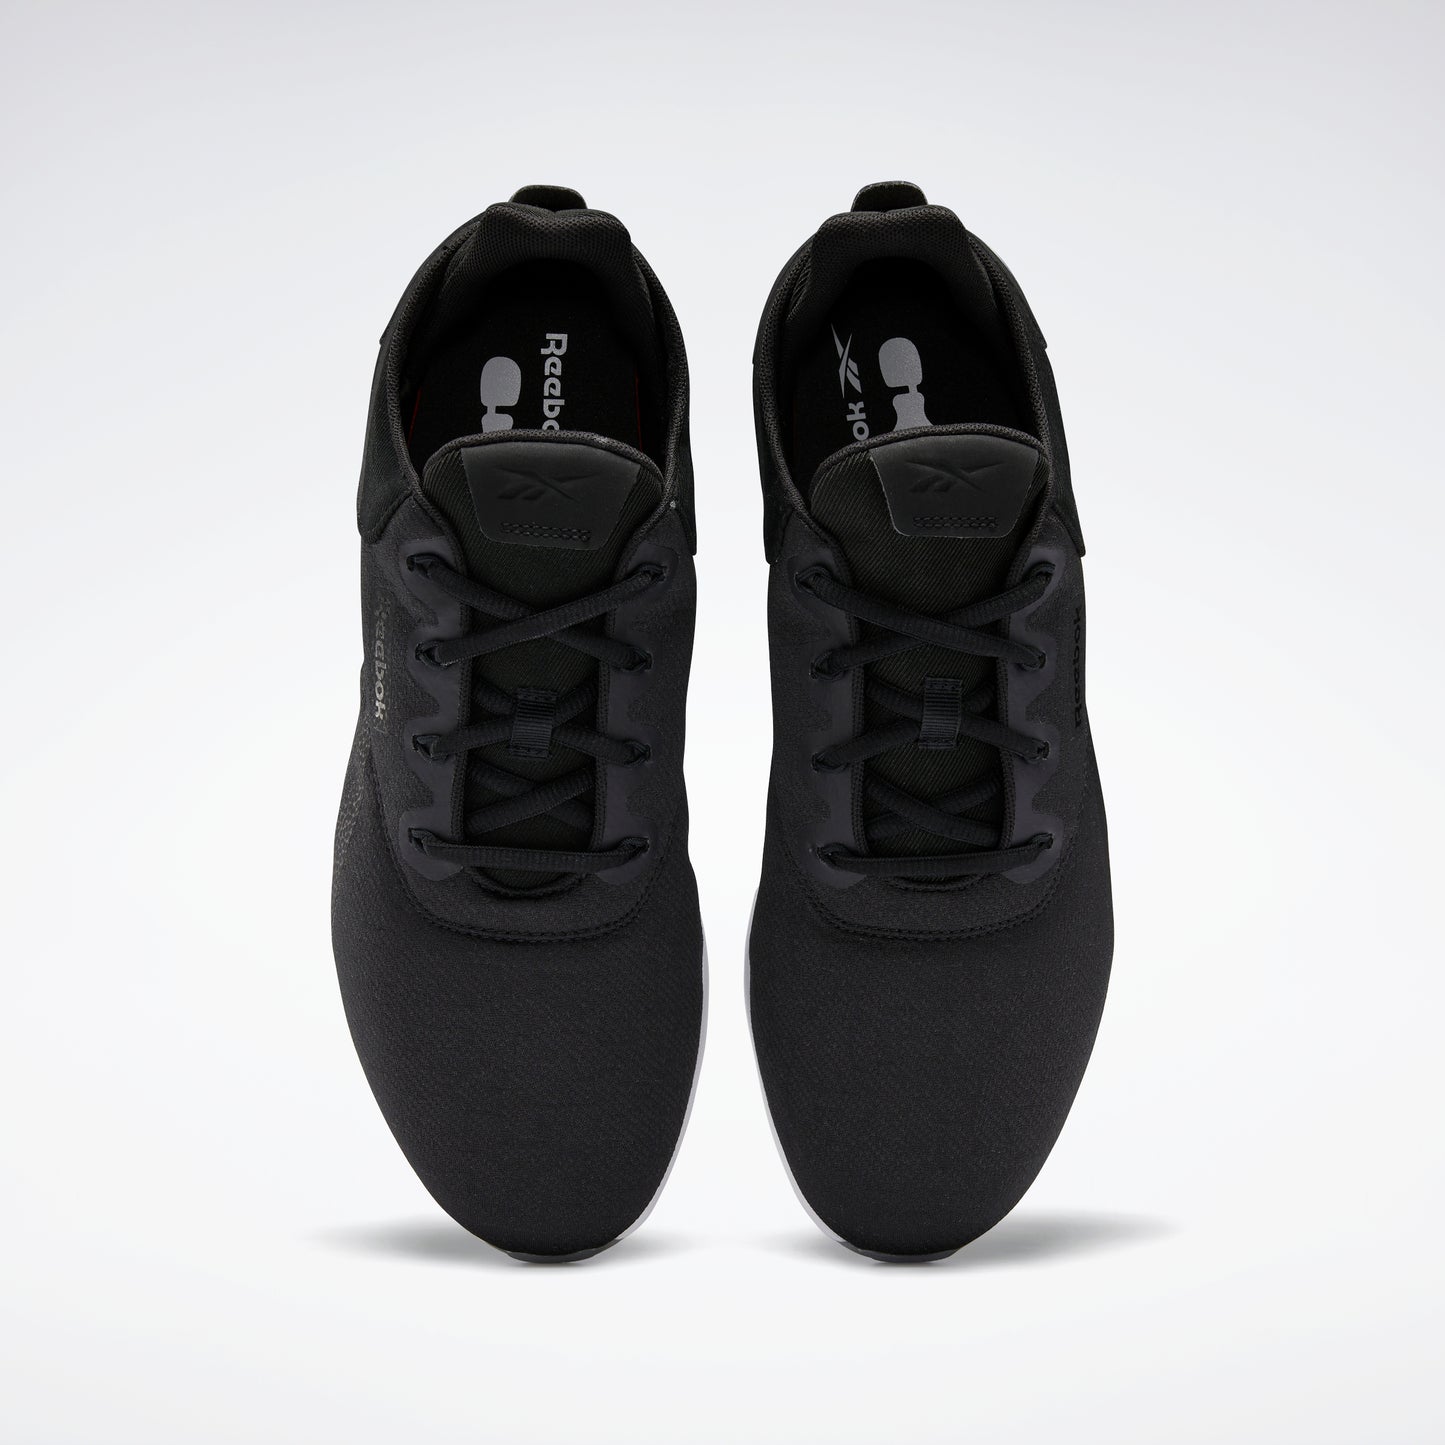 Reebok Footwear Men Dailyfit Dmx Shoes Cblack/Ftwwht/Cblack